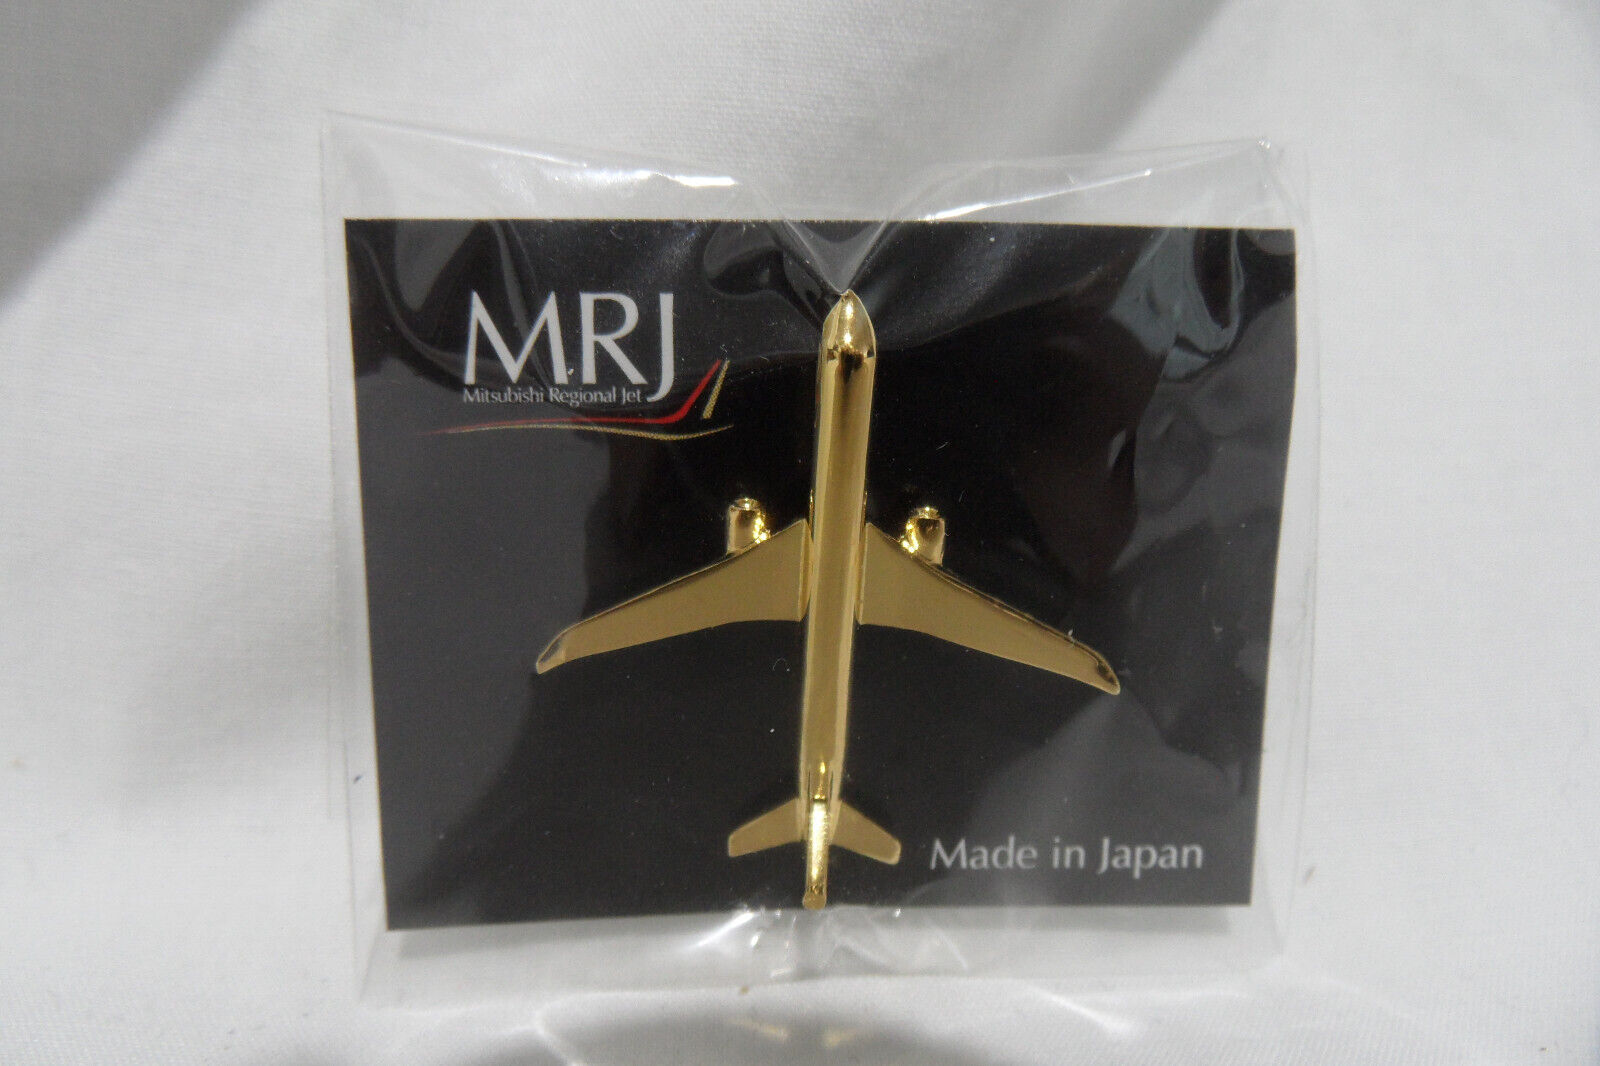 Mitsubishi Regional Jet lapel pin